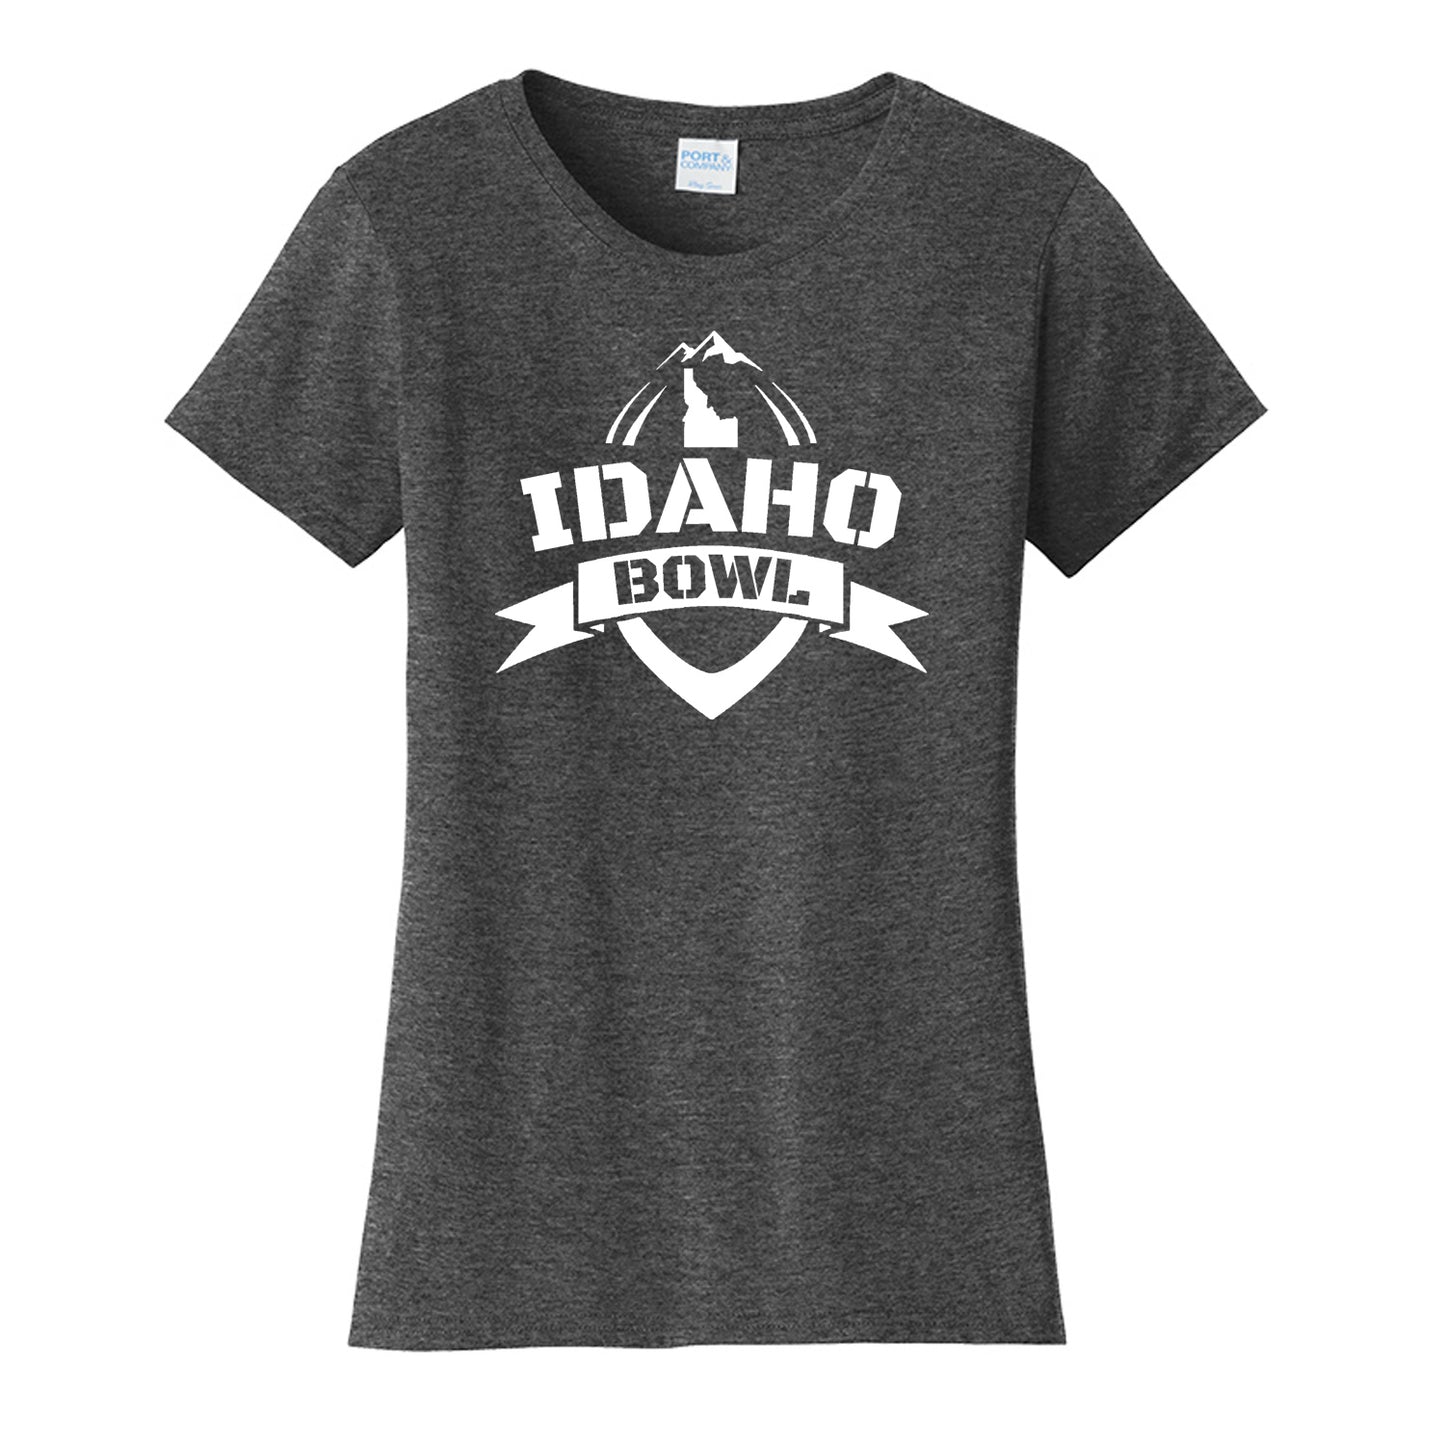 Idaho Bowl - Women's Tee - 3 colors available